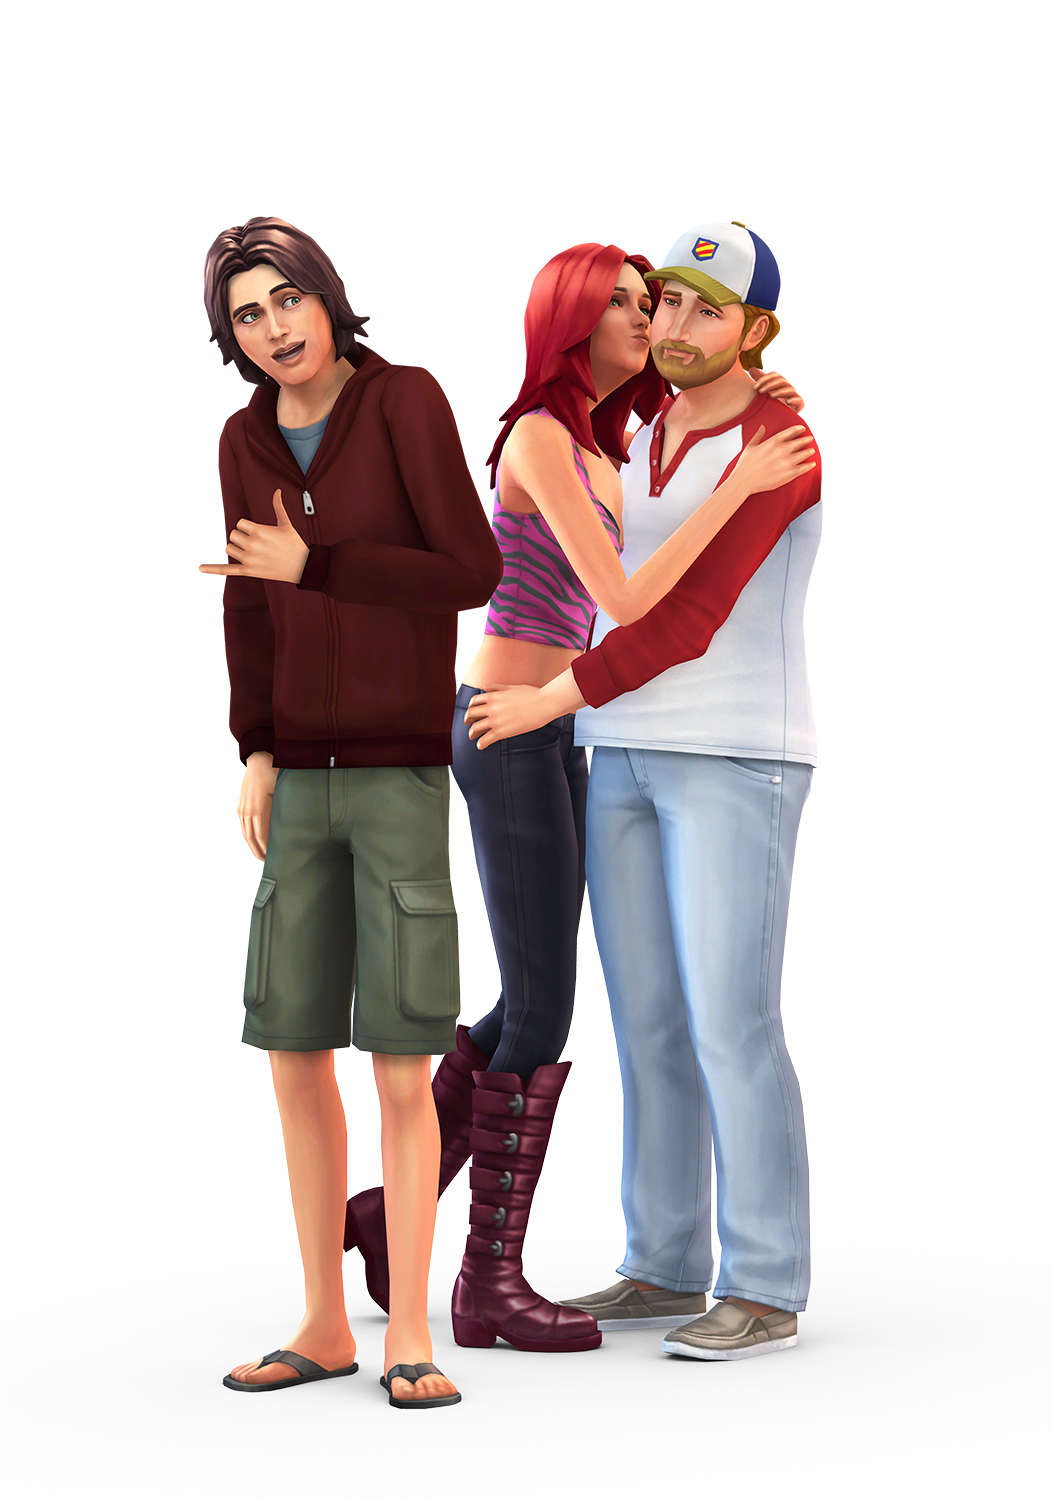 The Sims 4: Trailer, Press Release & Screens | SimsVIP